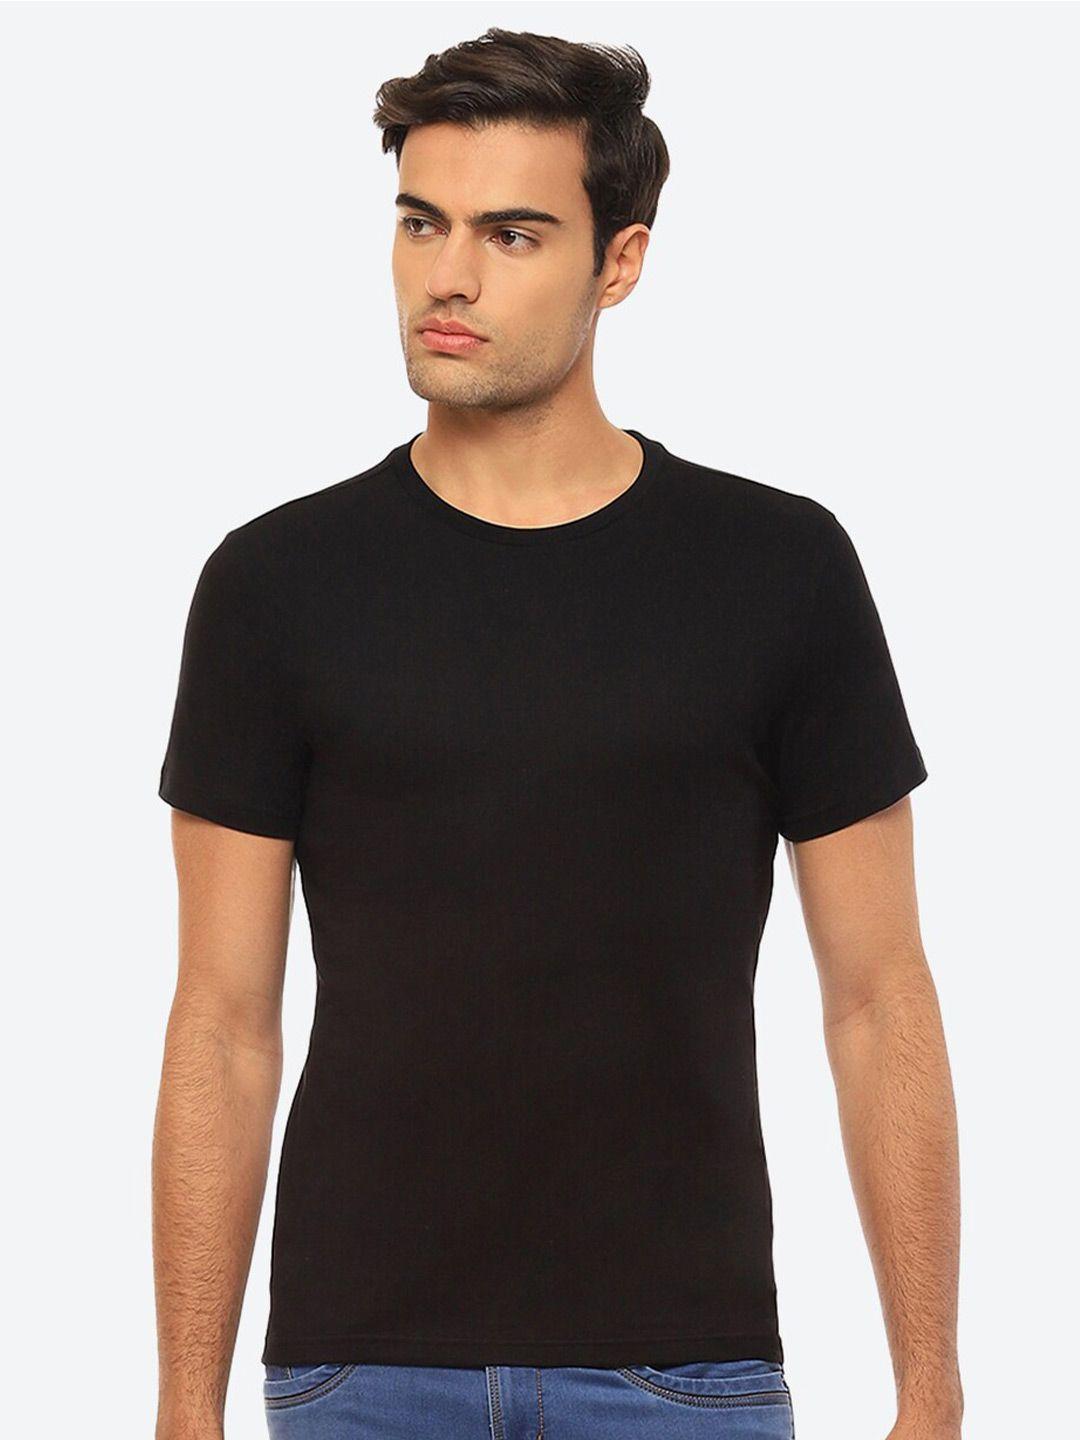 2bme round neck short sleeves cotton t-shirt